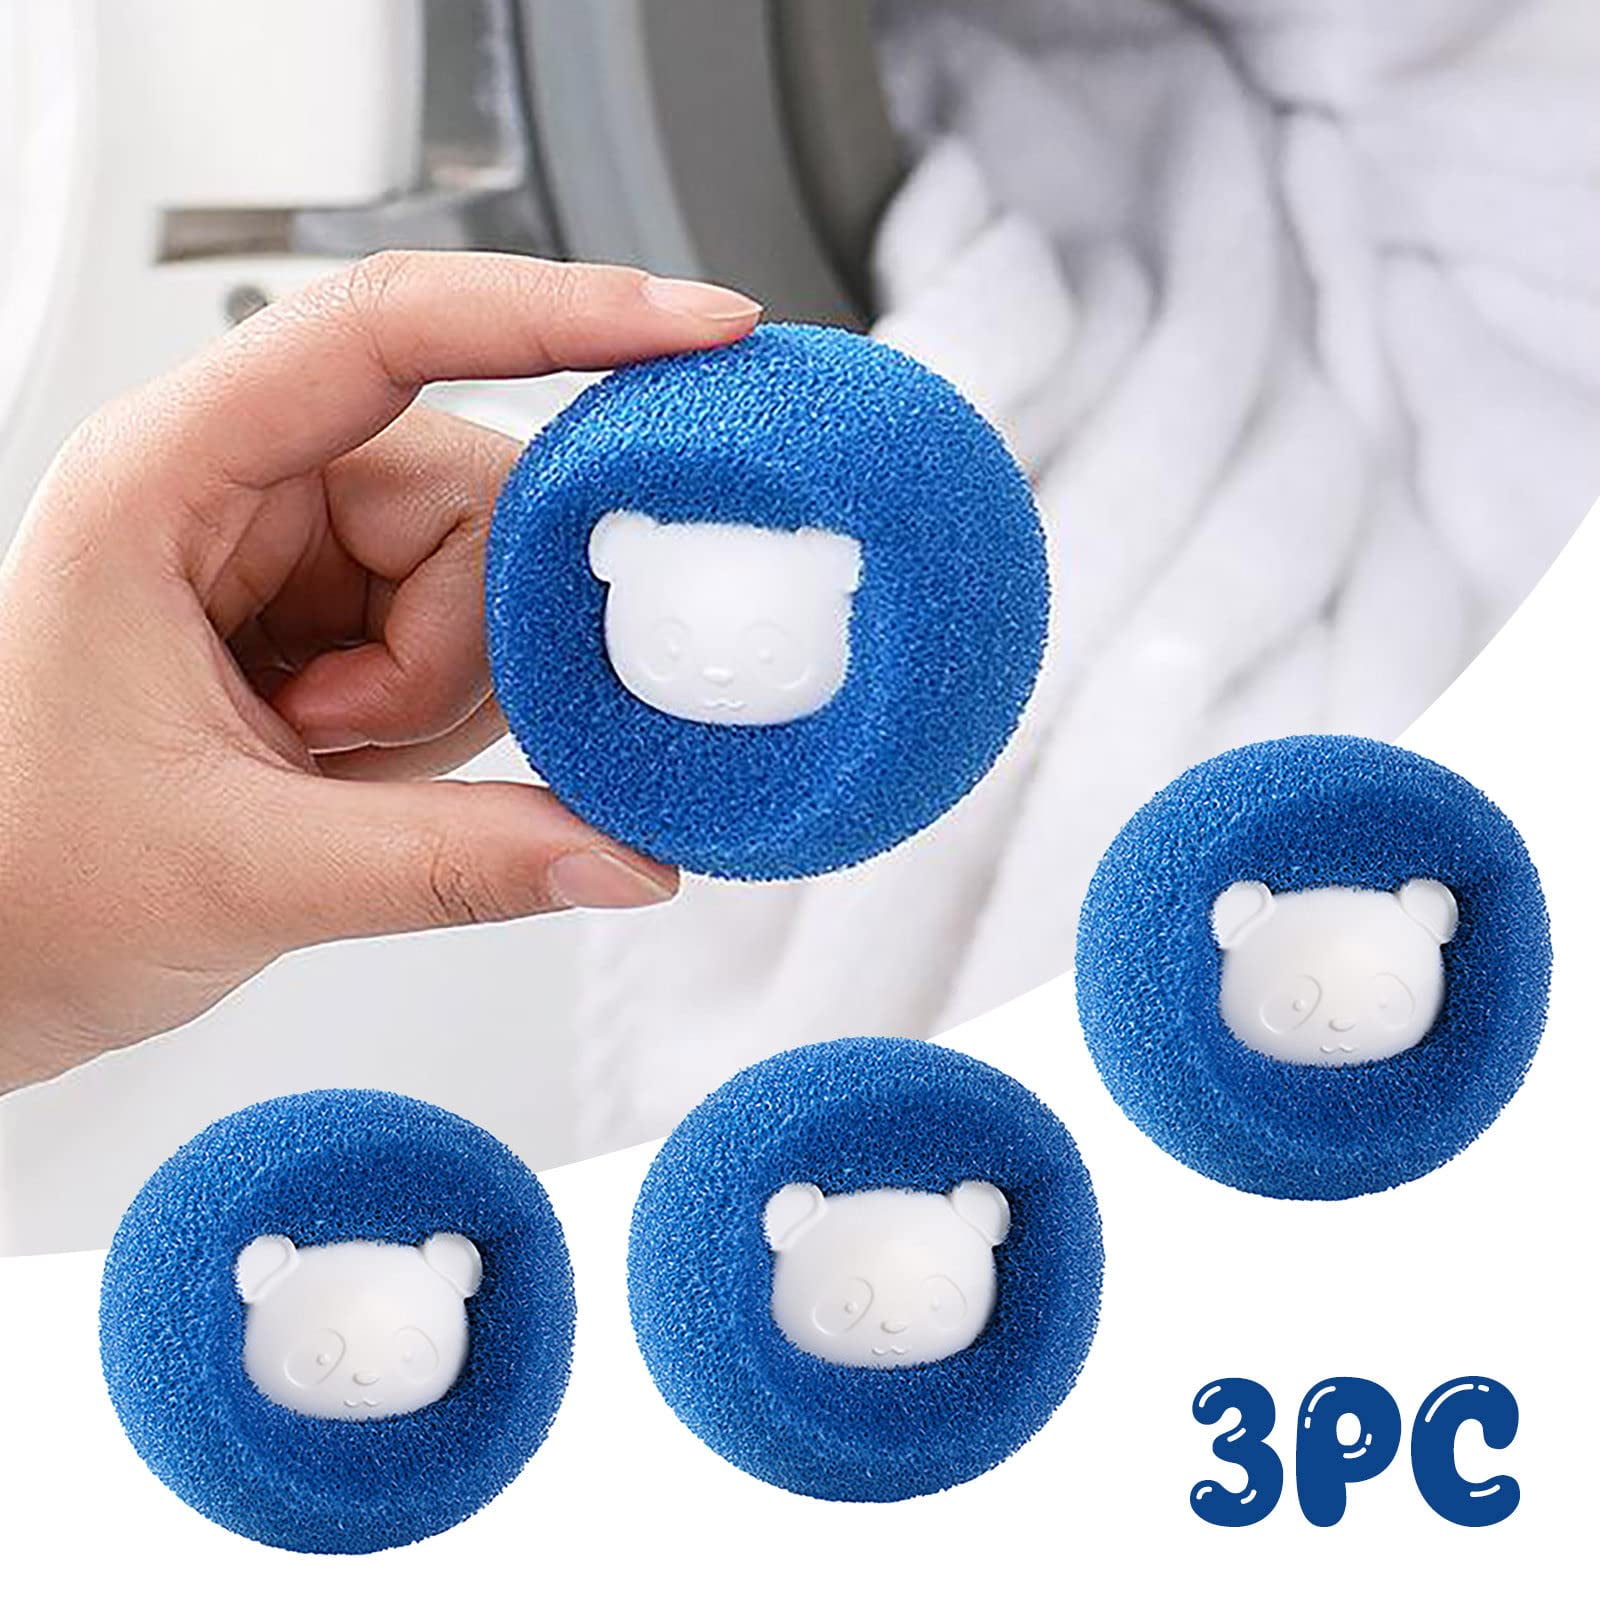 Details about   6Pcs Remover Washing Balls For Laundry Lint Reusable Pet Hair Dryer Balls H2K8 